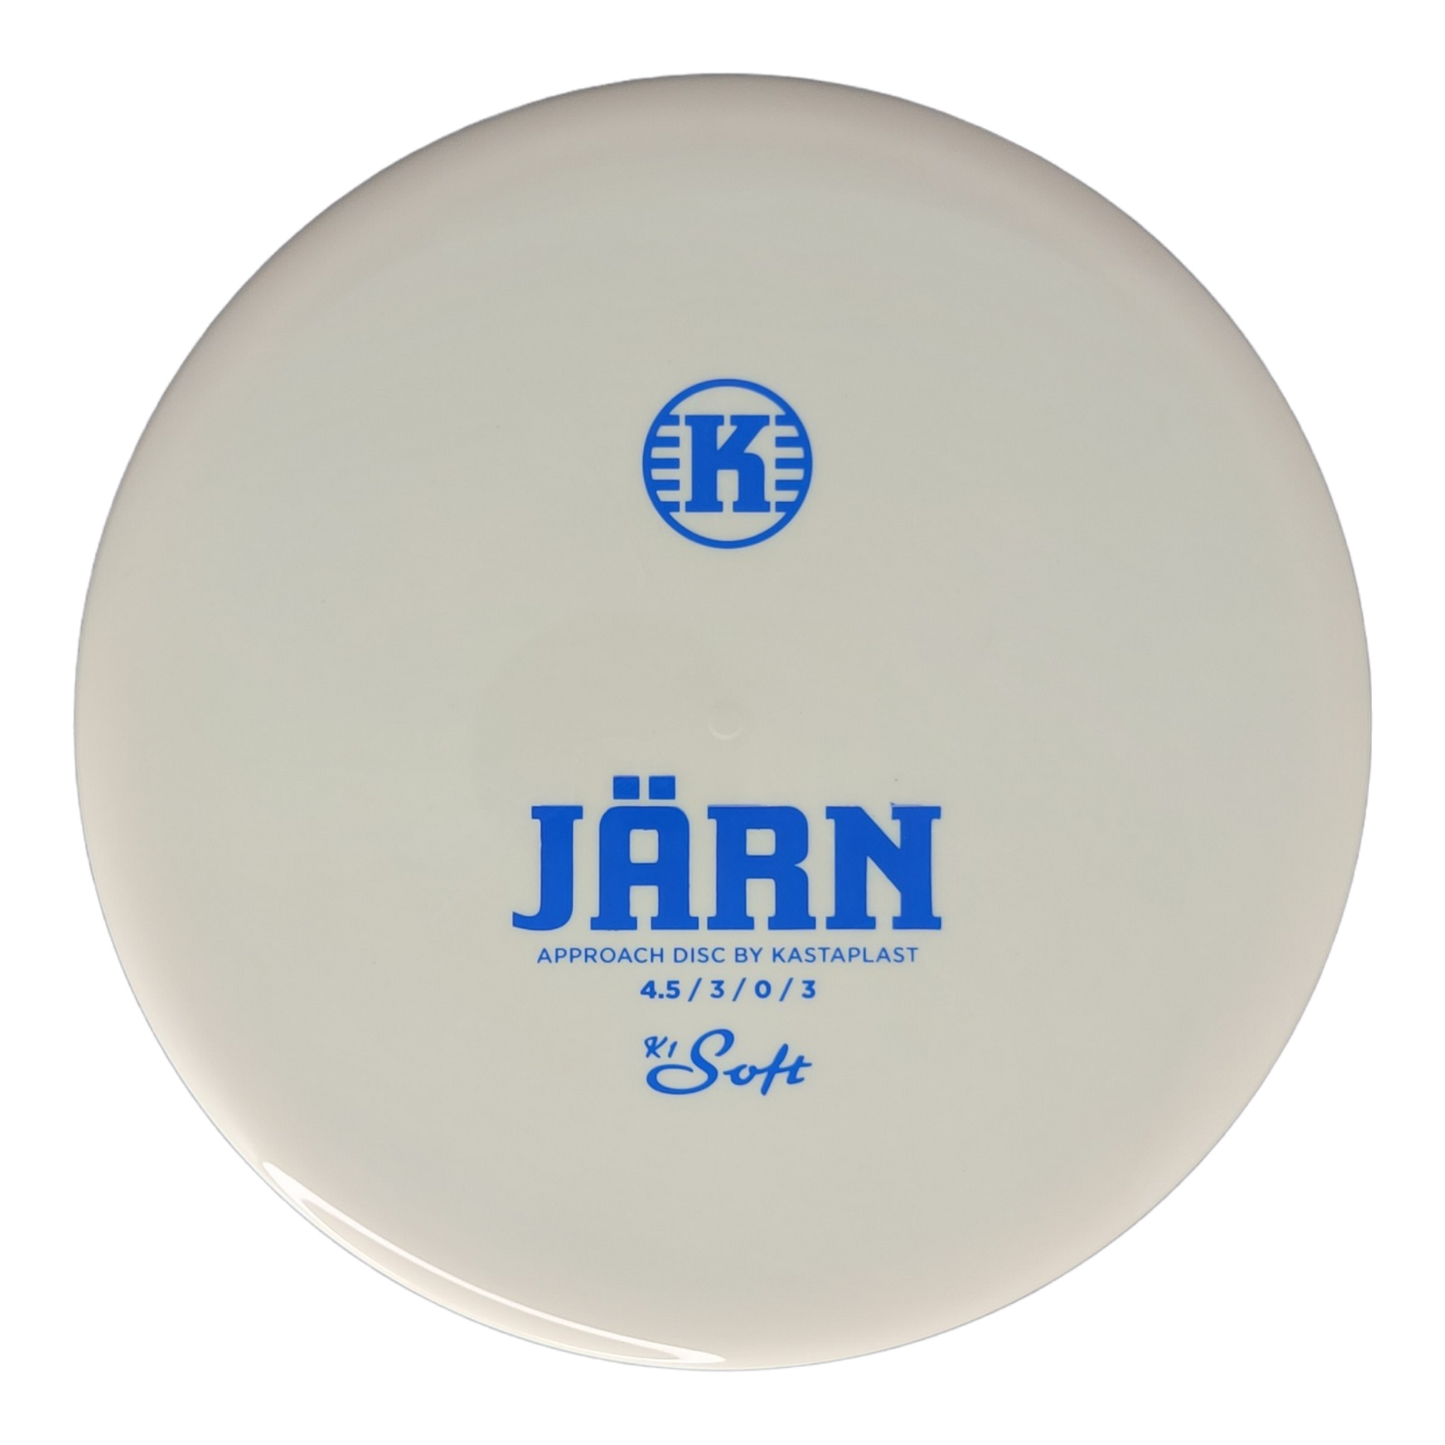 Kastaplast K1 Soft Jarn Disc